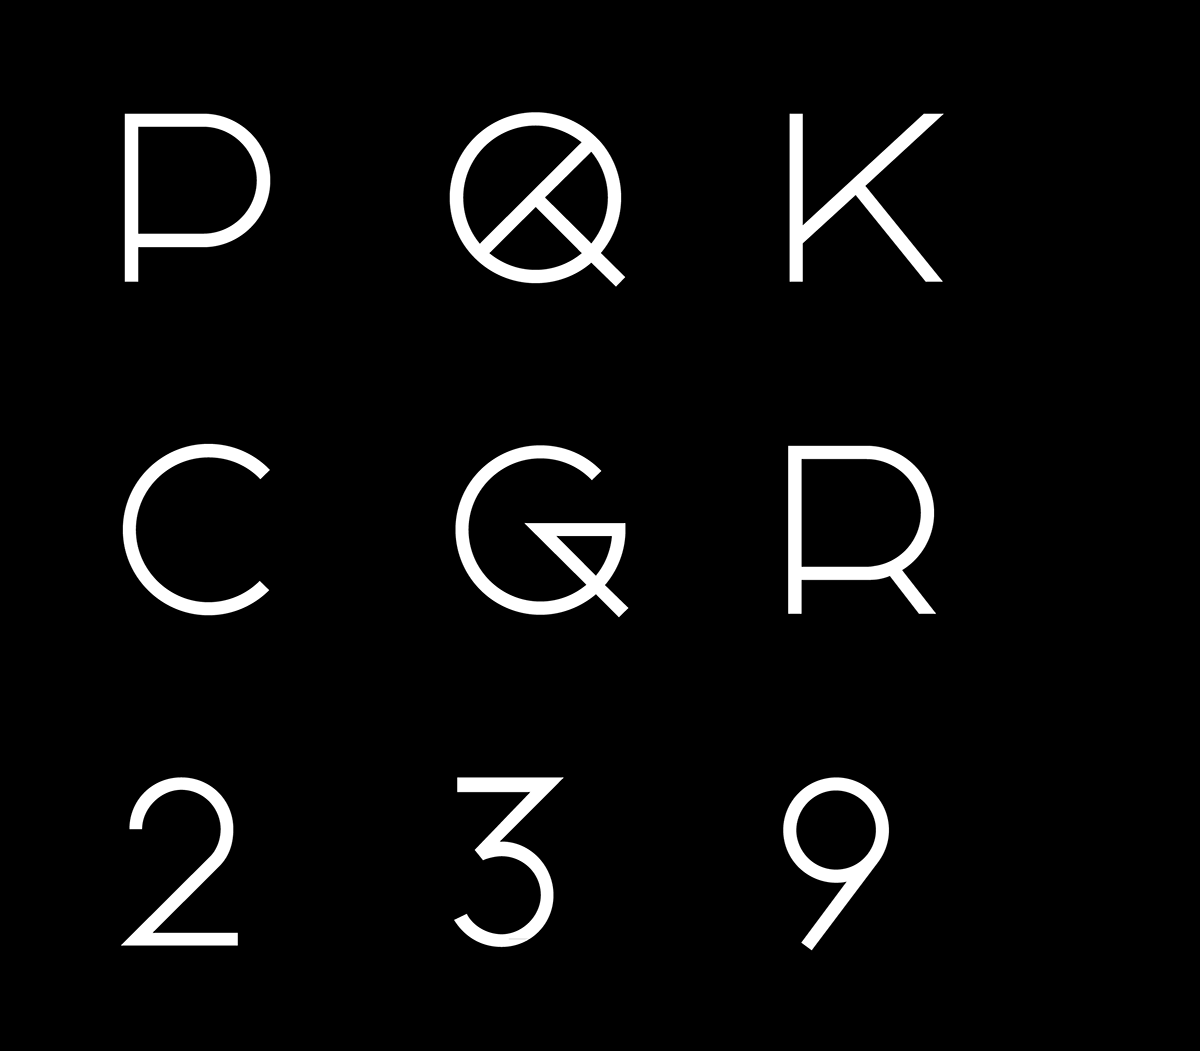 typo Display sans serif alternative Typeface alchemic poster Logotype brochure Space  future 80's shade geometric uppercase